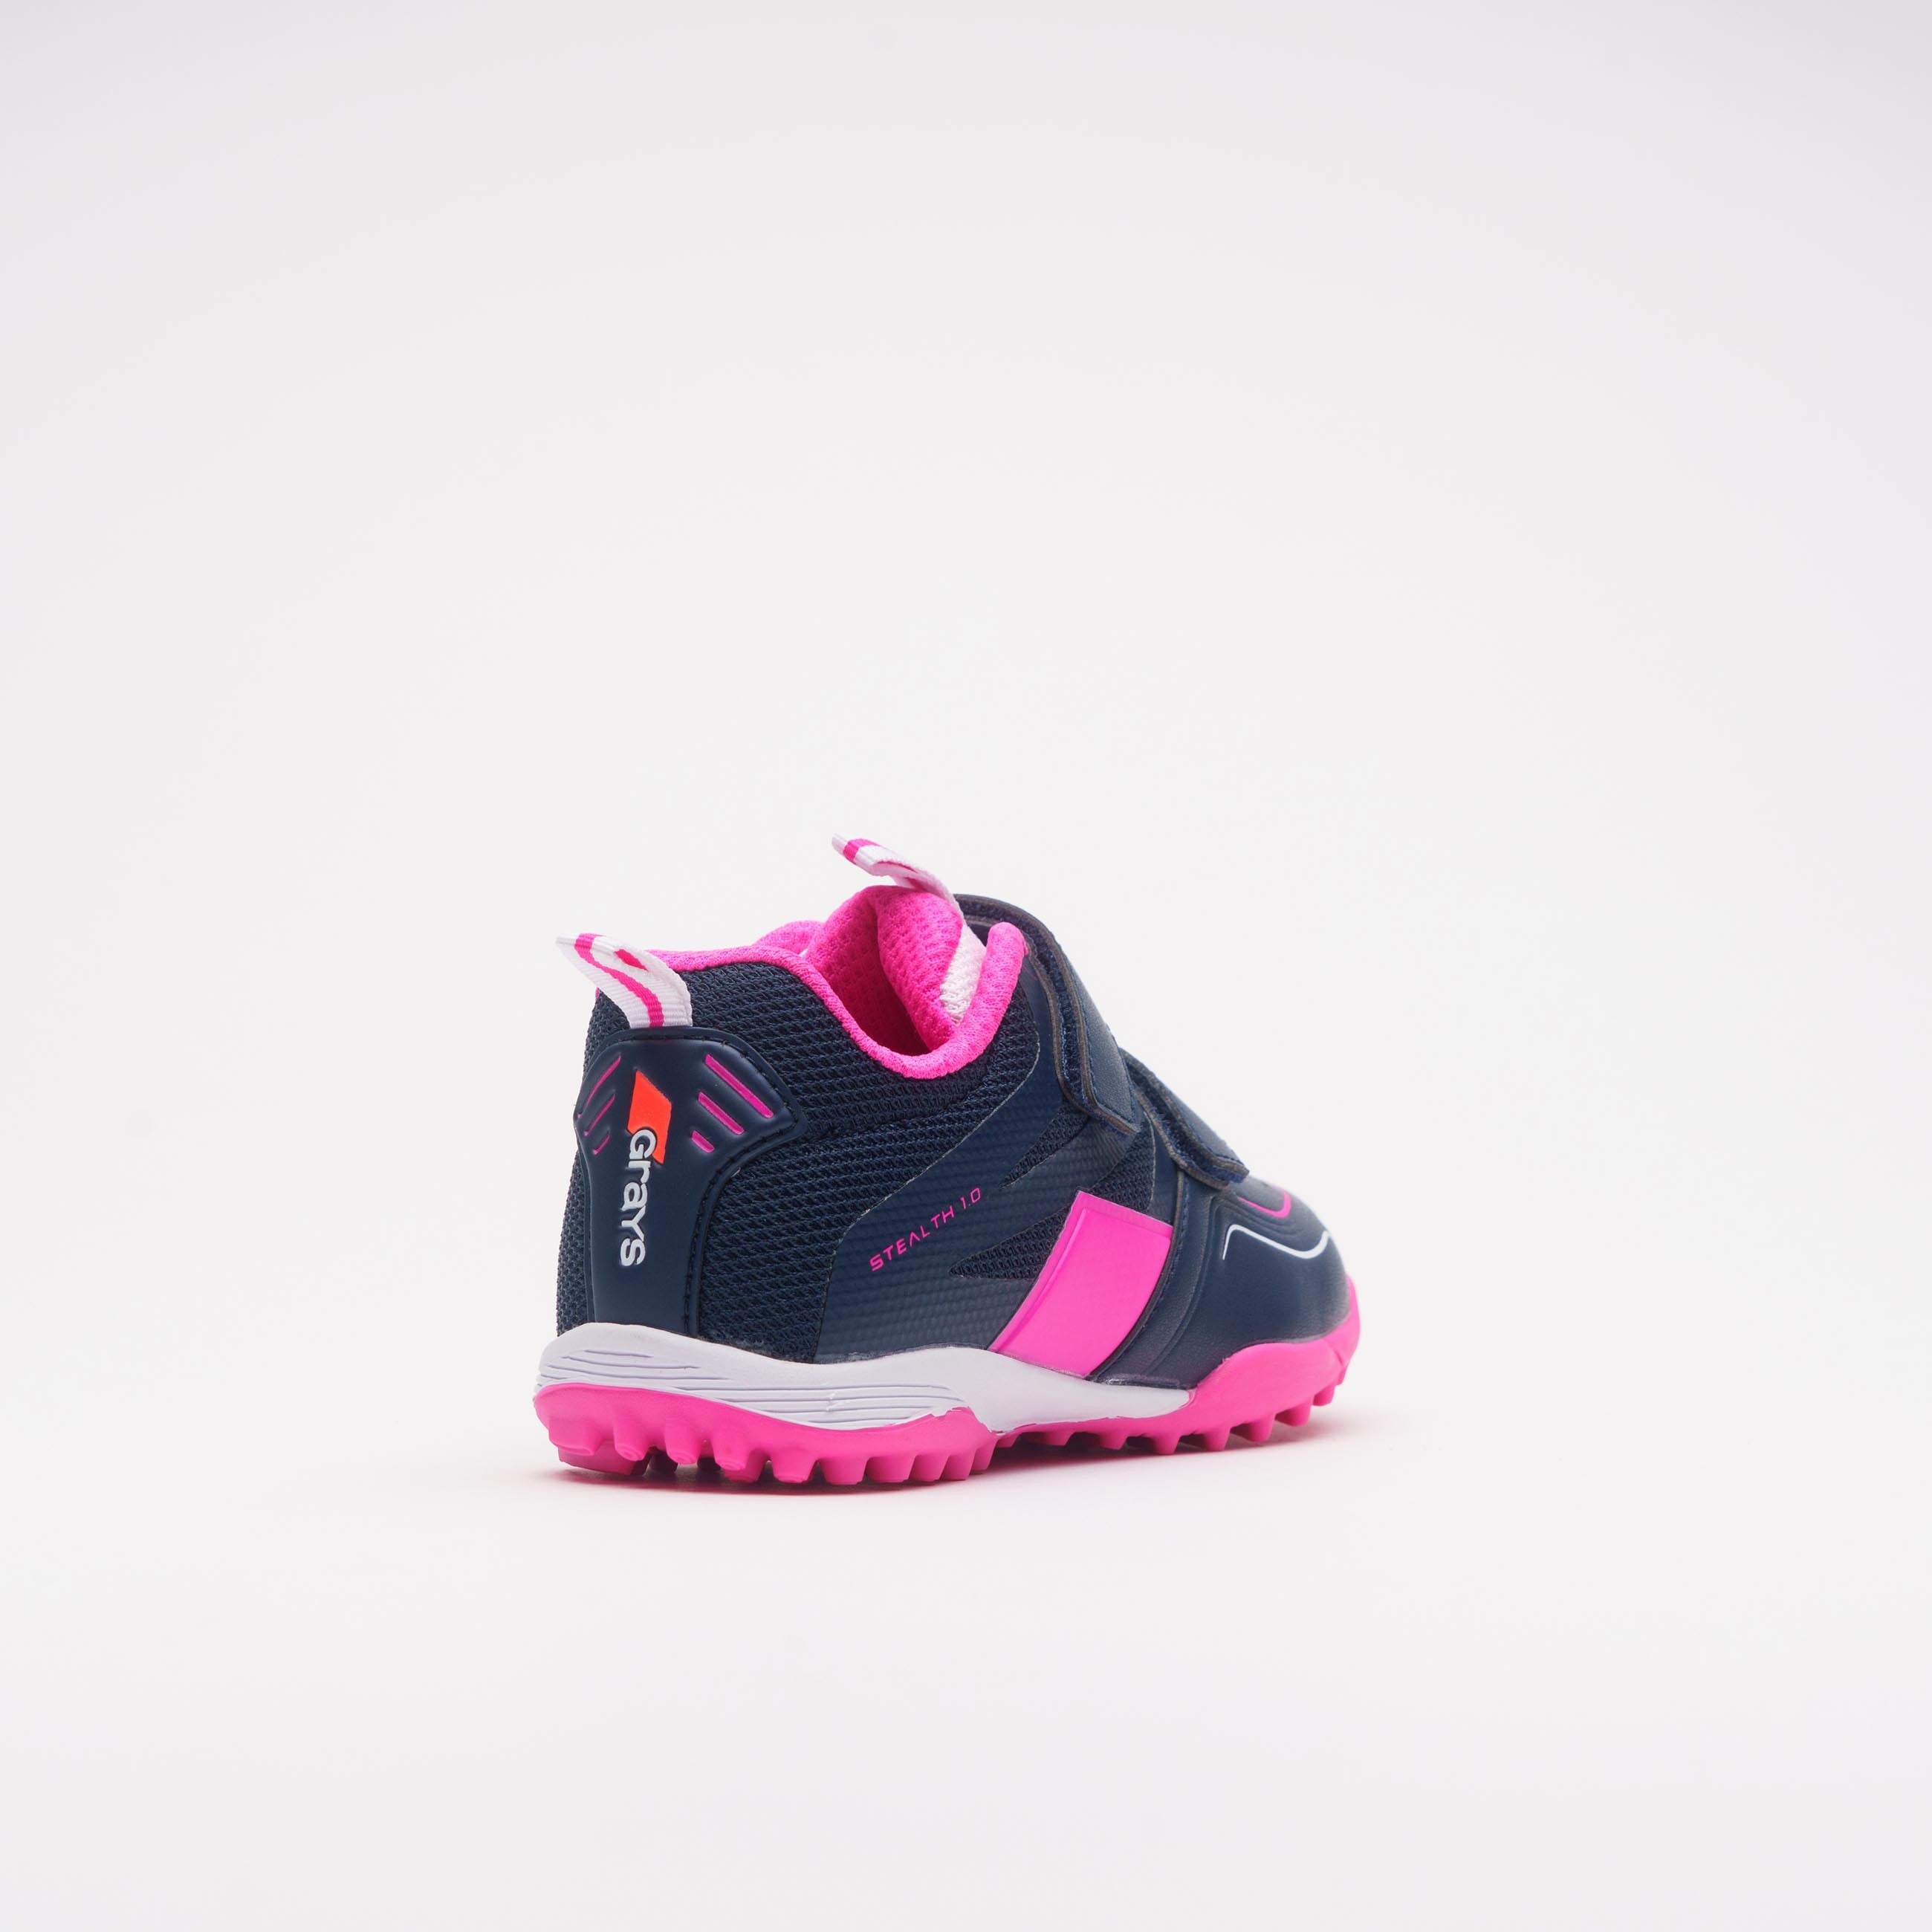 HSEI24Shoes Navy Pink Mini Hockey Shoe, Outstep Heel